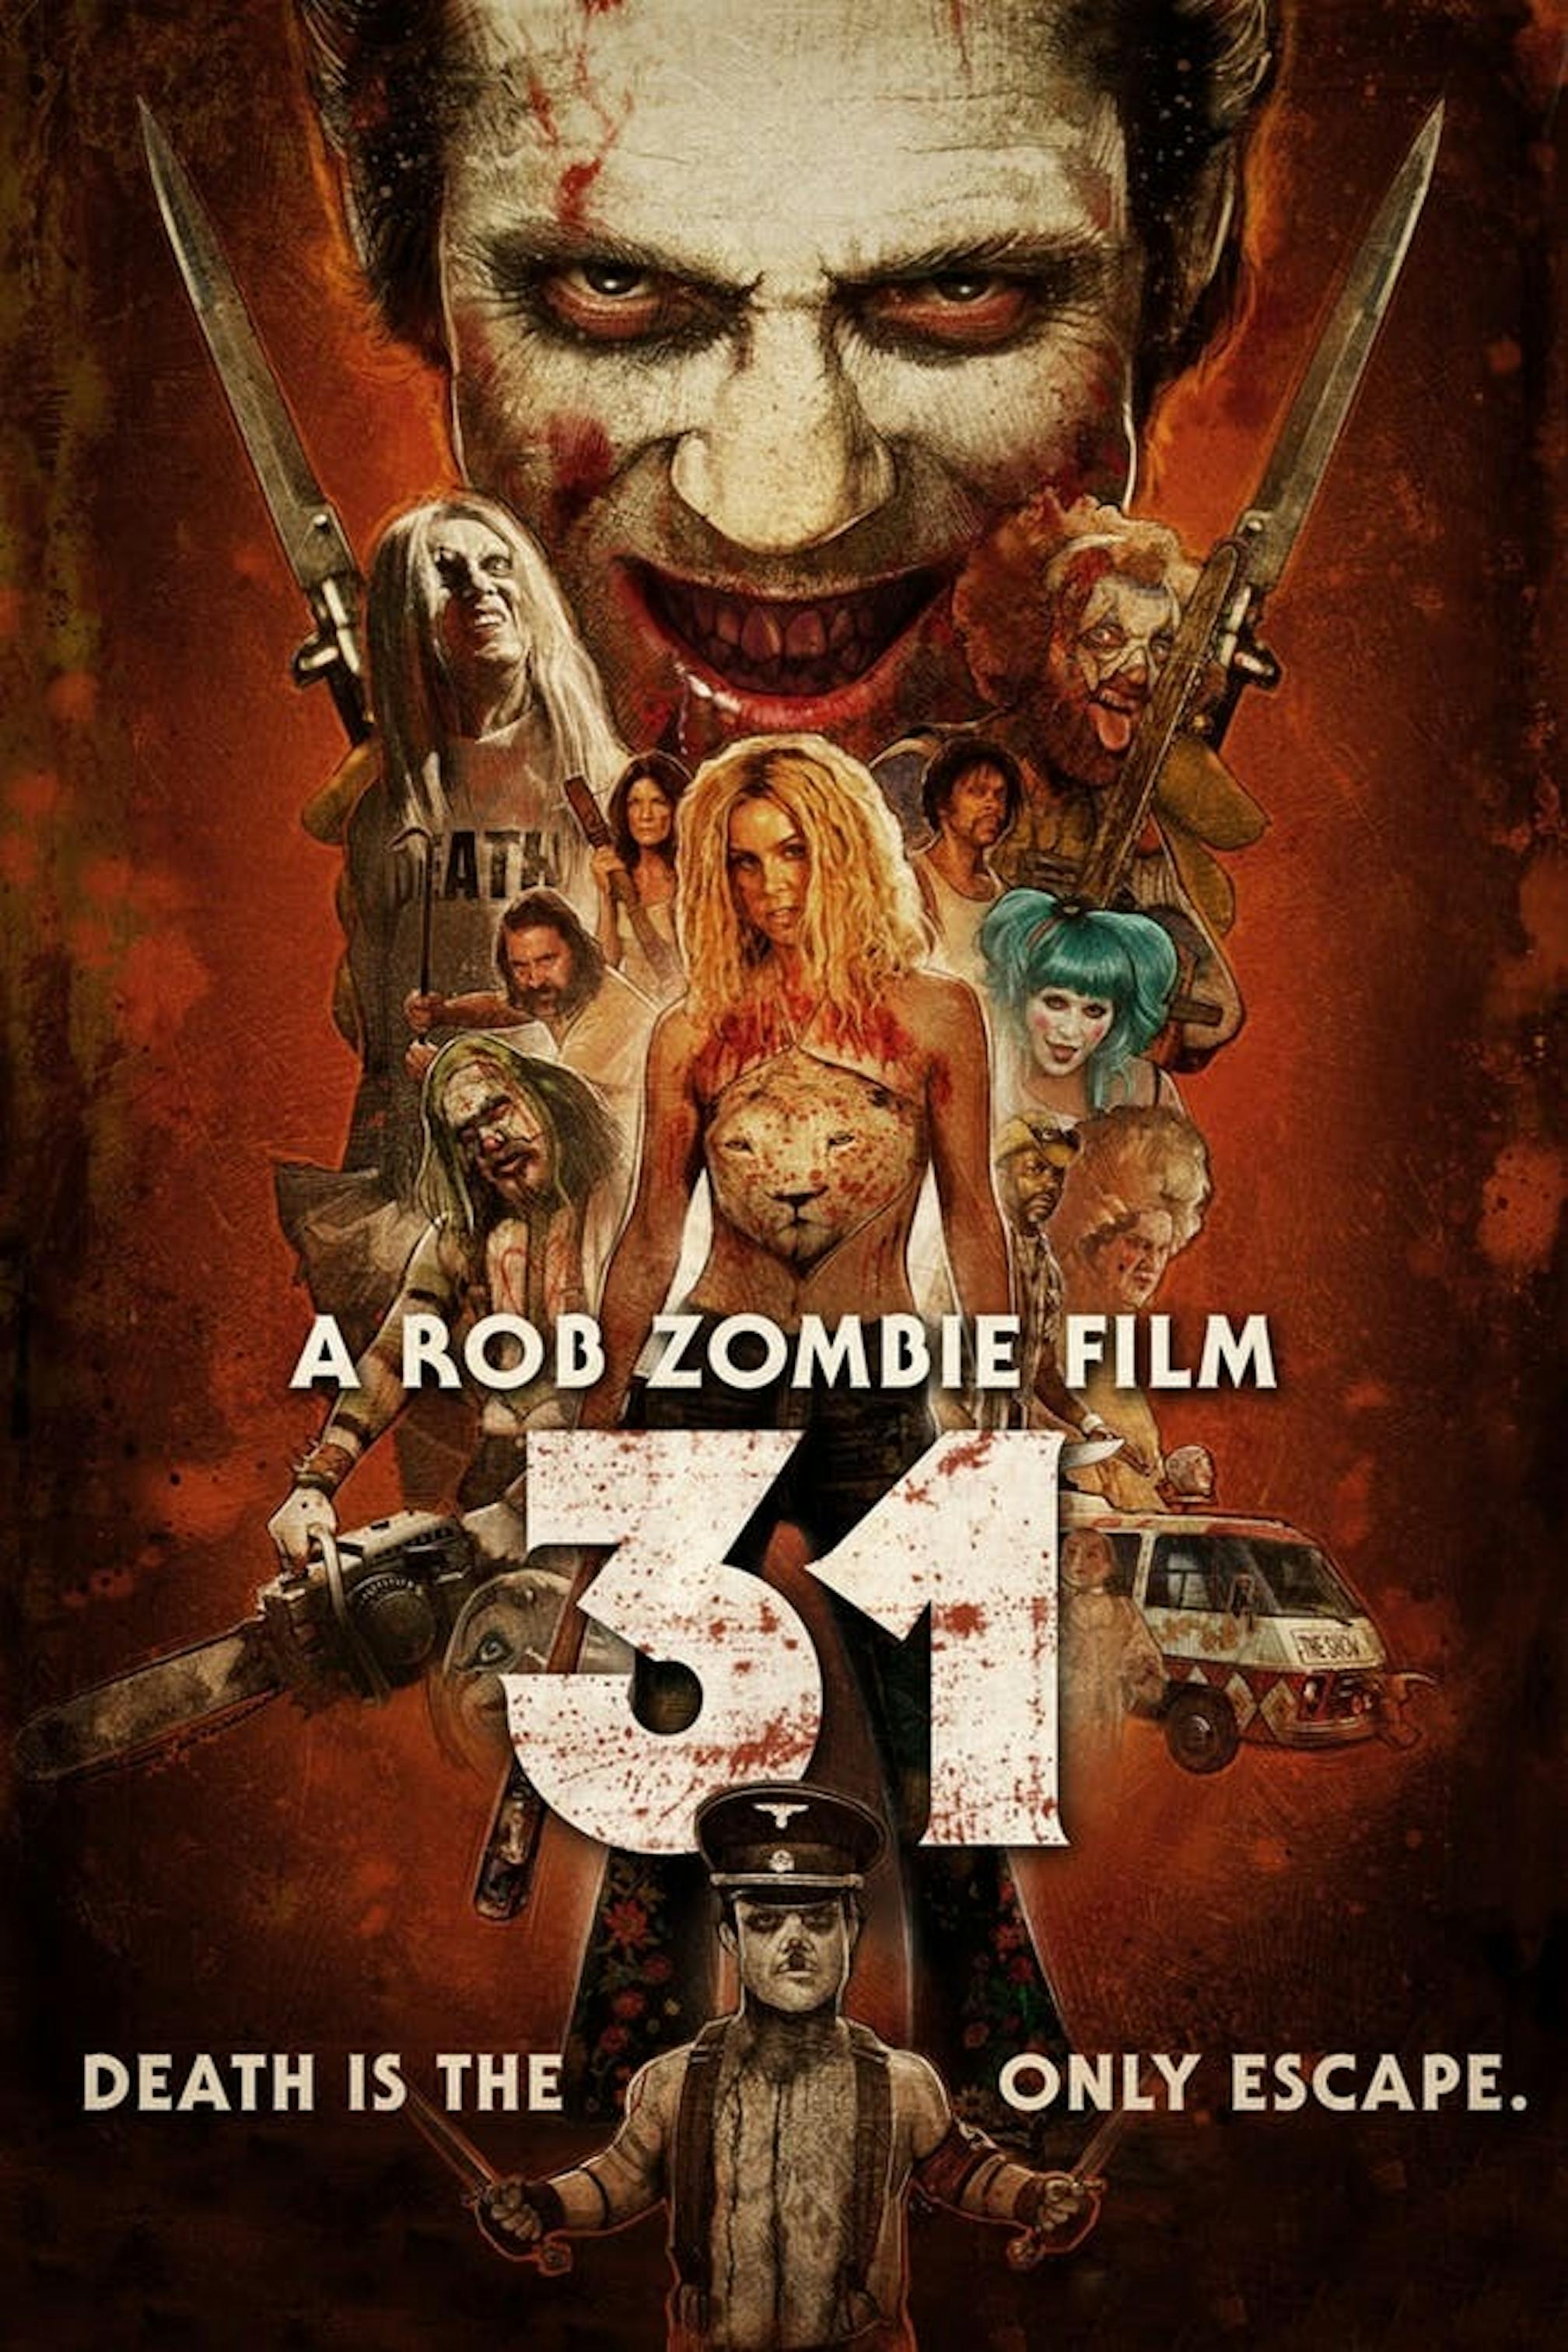 Rob Zombie 31 2016 Film Poster ?auto=compress&fit=crop&w=2016